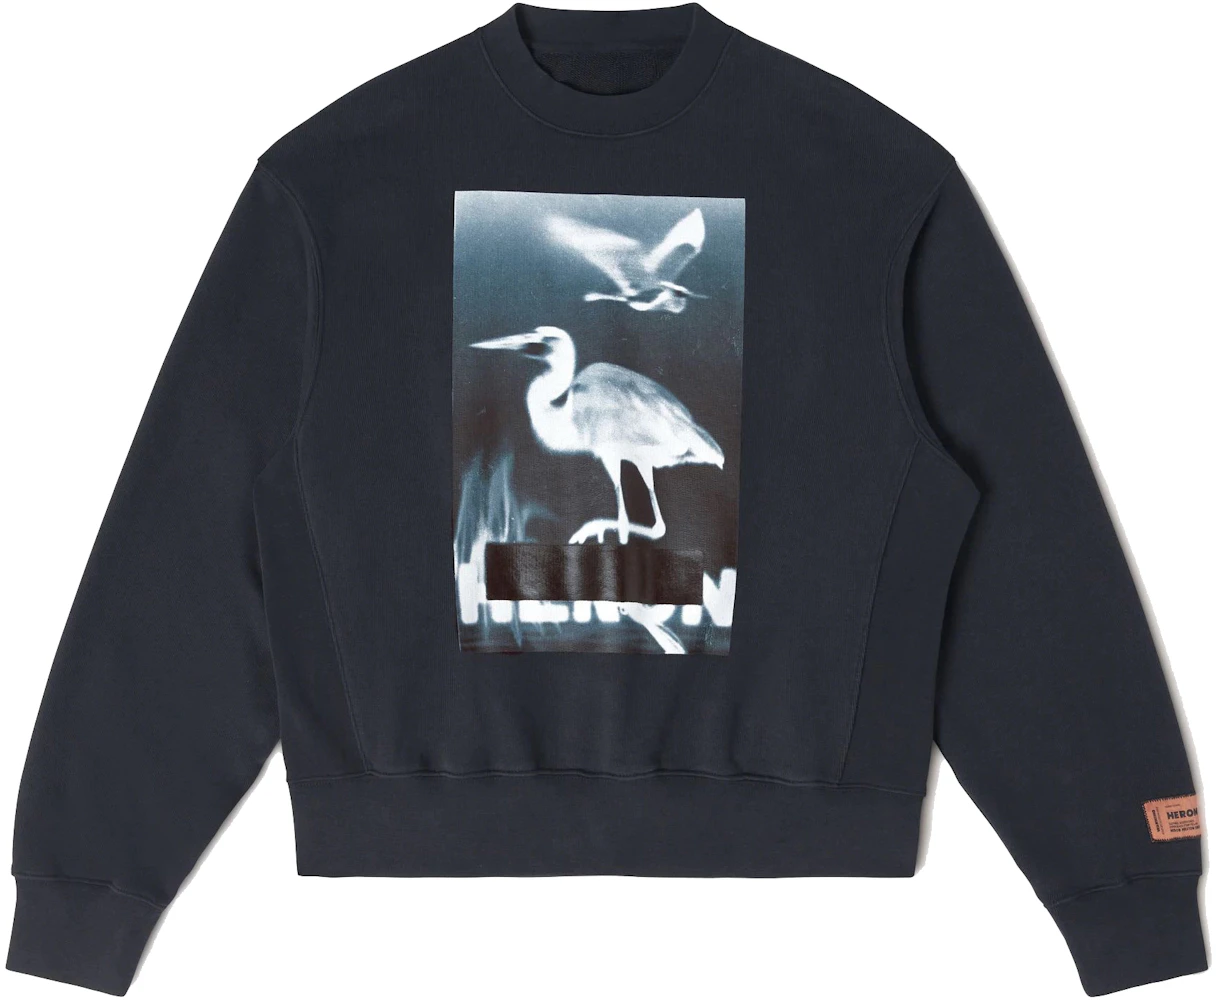 ⑅୨୧ 190216 ୨୧⑅* ICN #BLACKPINK #ROSÉ ⠀ brand - HERON PRESTON spots cropped  sweater brand - LOUIS VUITTON …